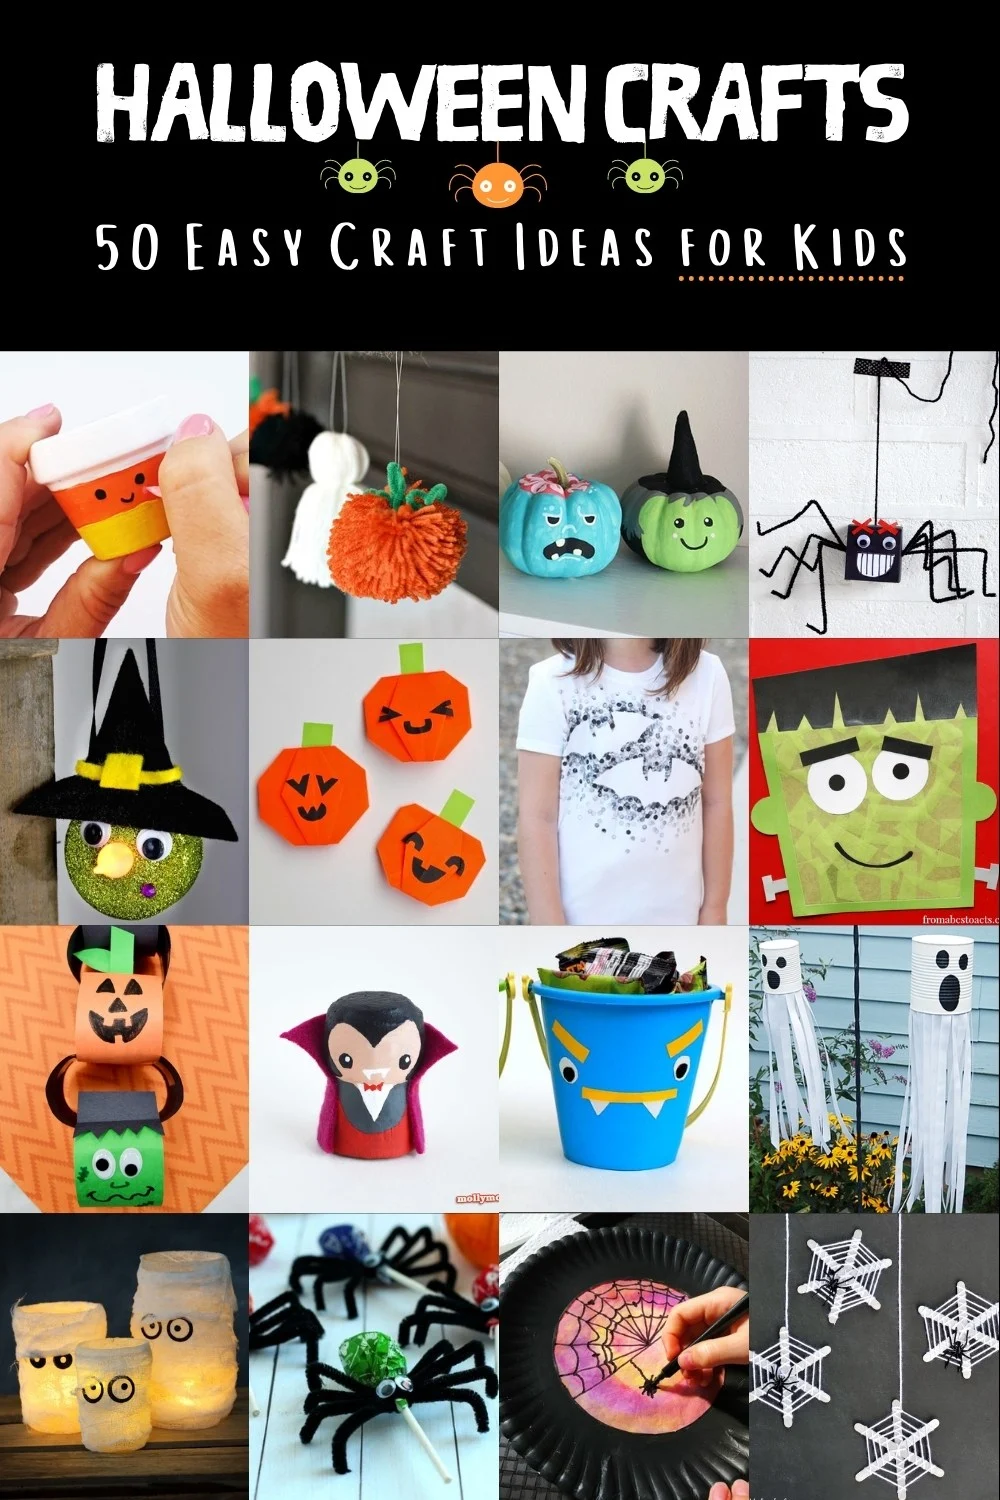 10 Spooky DIY Halloween Crafts for Kids 1. Creating Spooky Atmosphere